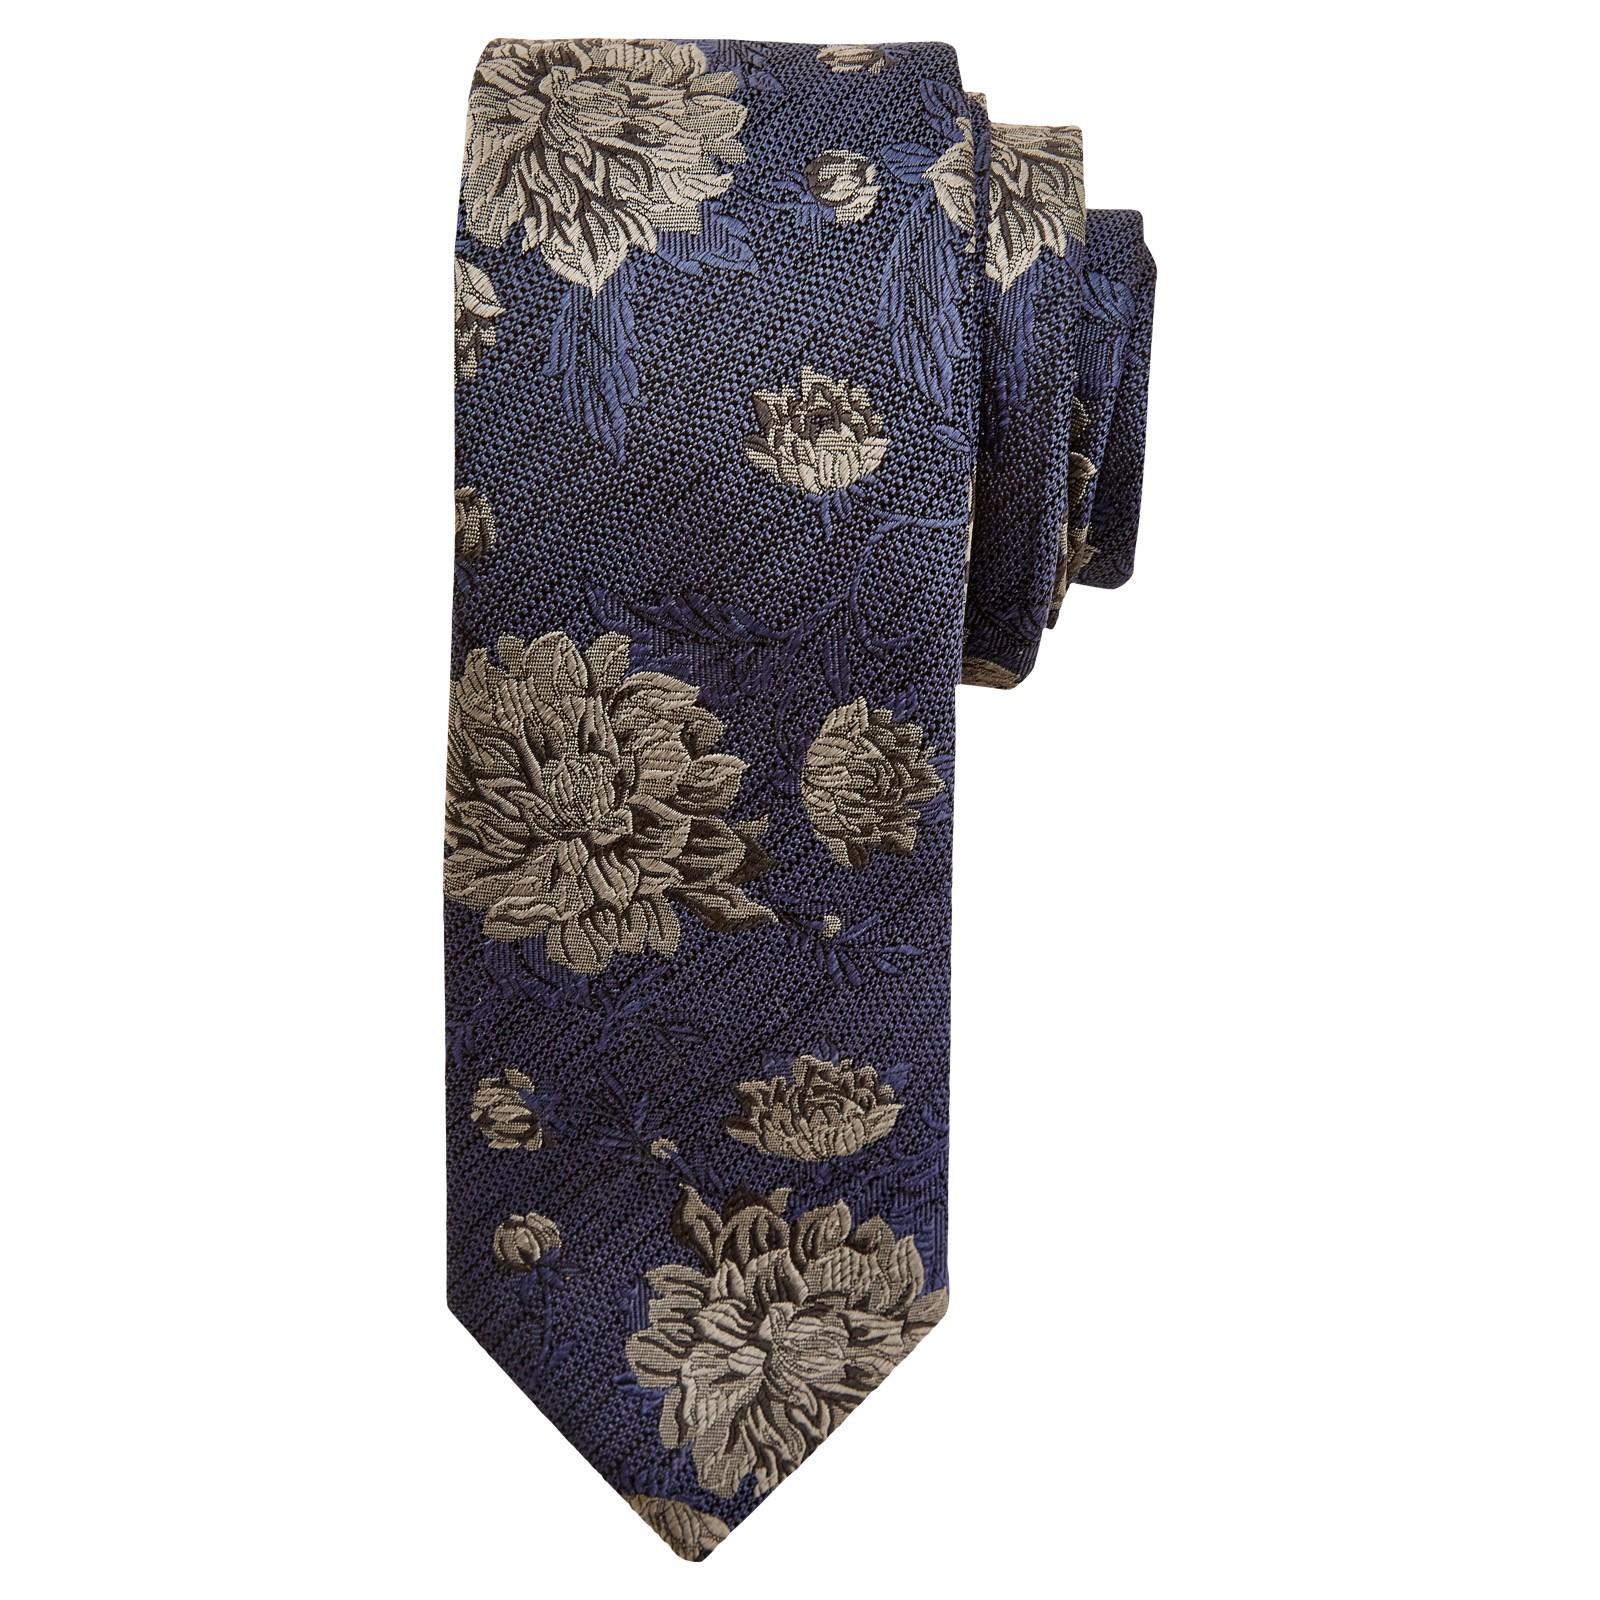 Ted Baker Floral Silk Tie in Blue/Gold (Blue) for Men - Lyst